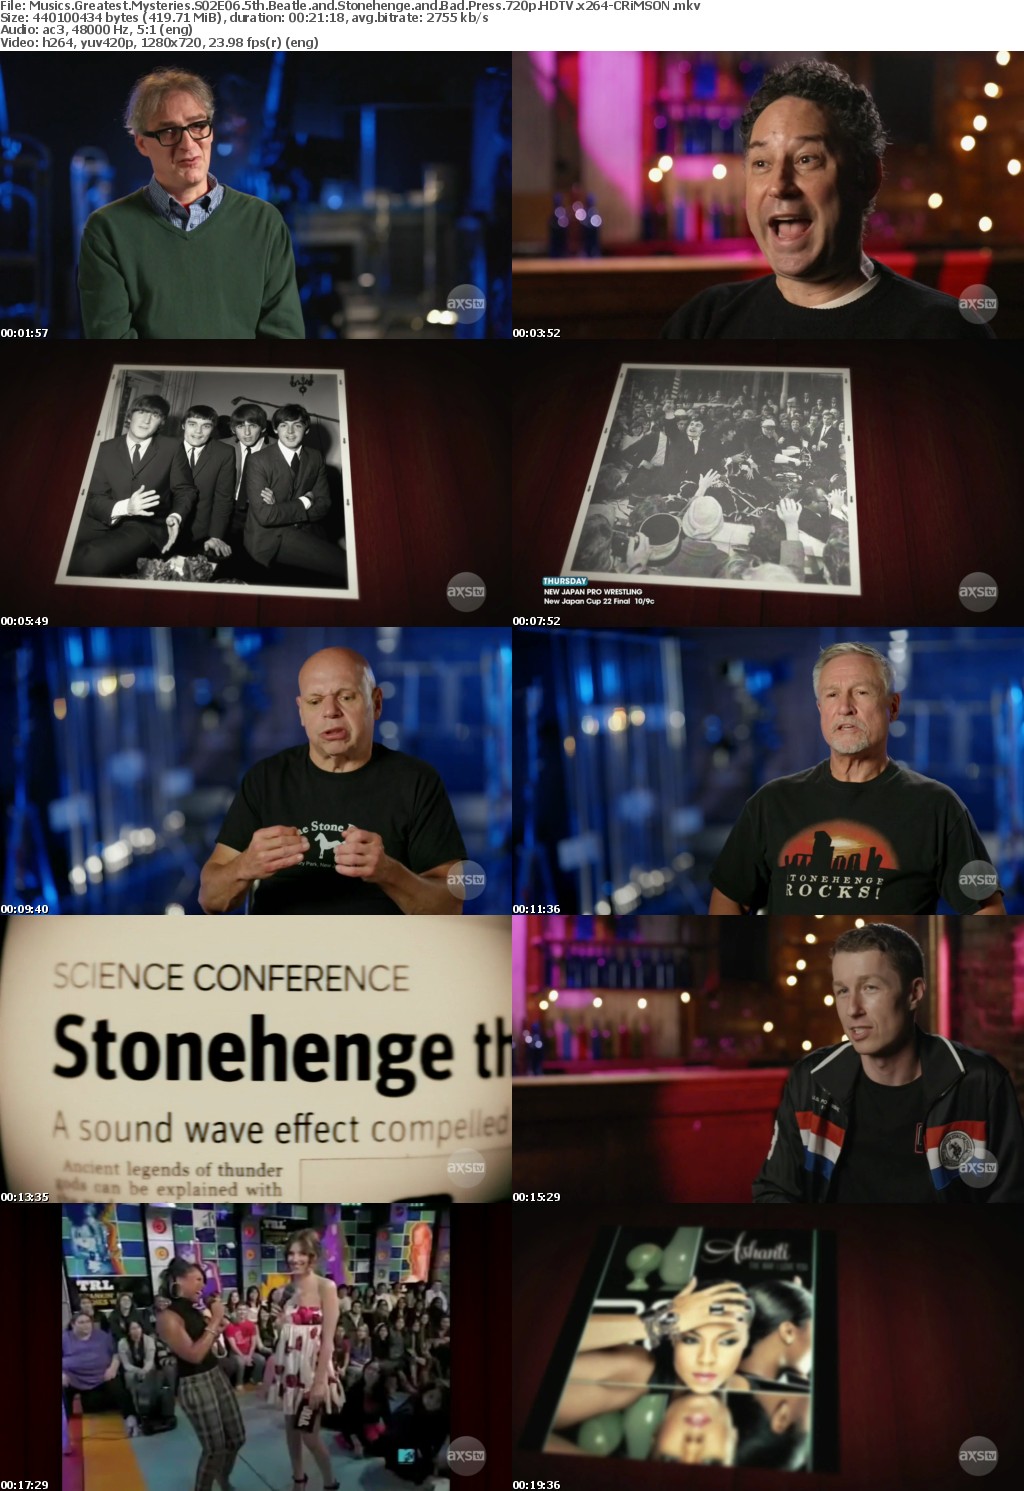 Musics Greatest Mysteries S02E06 5th Beatle and Stonehenge and Bad Press 720p HDTV x264-CRiMSON